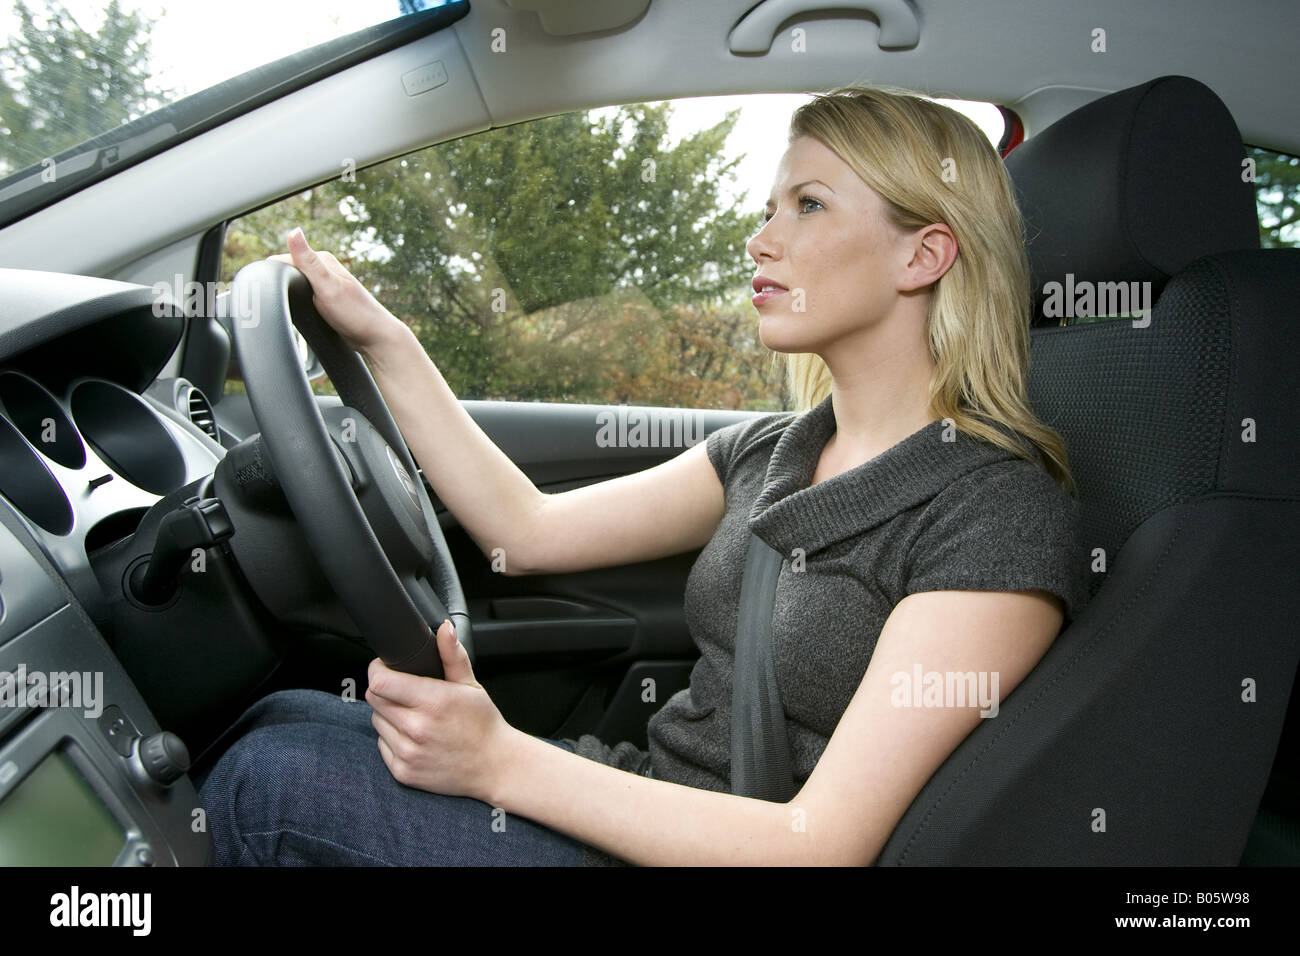 Woman driving car Stock Photo